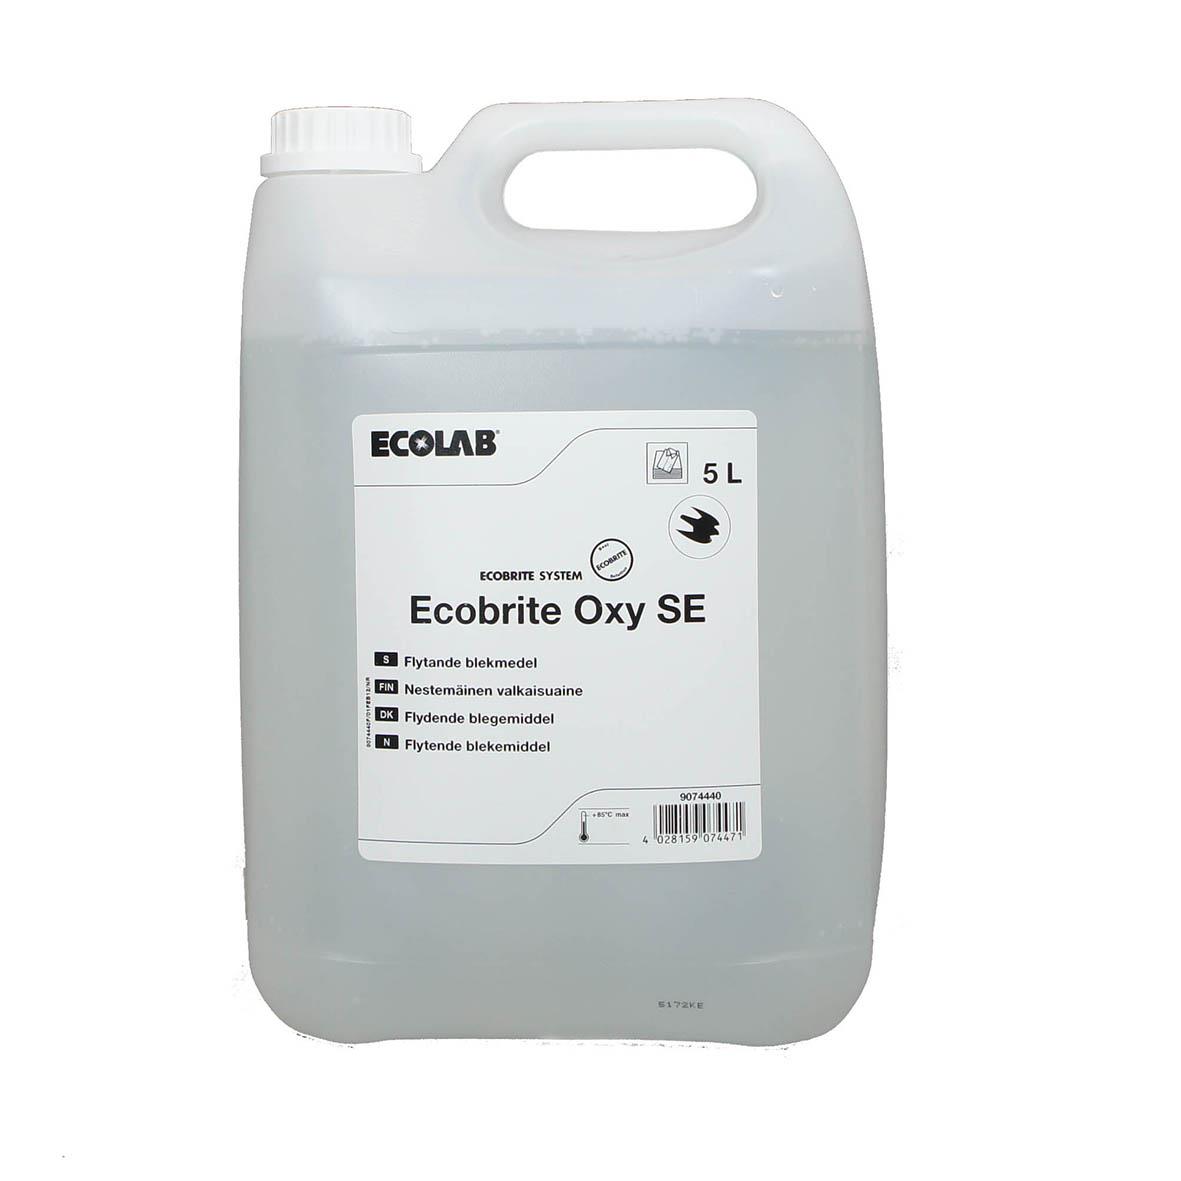 Blekmedel Ecolab Ecobrite Oxy SE 5L 52100060